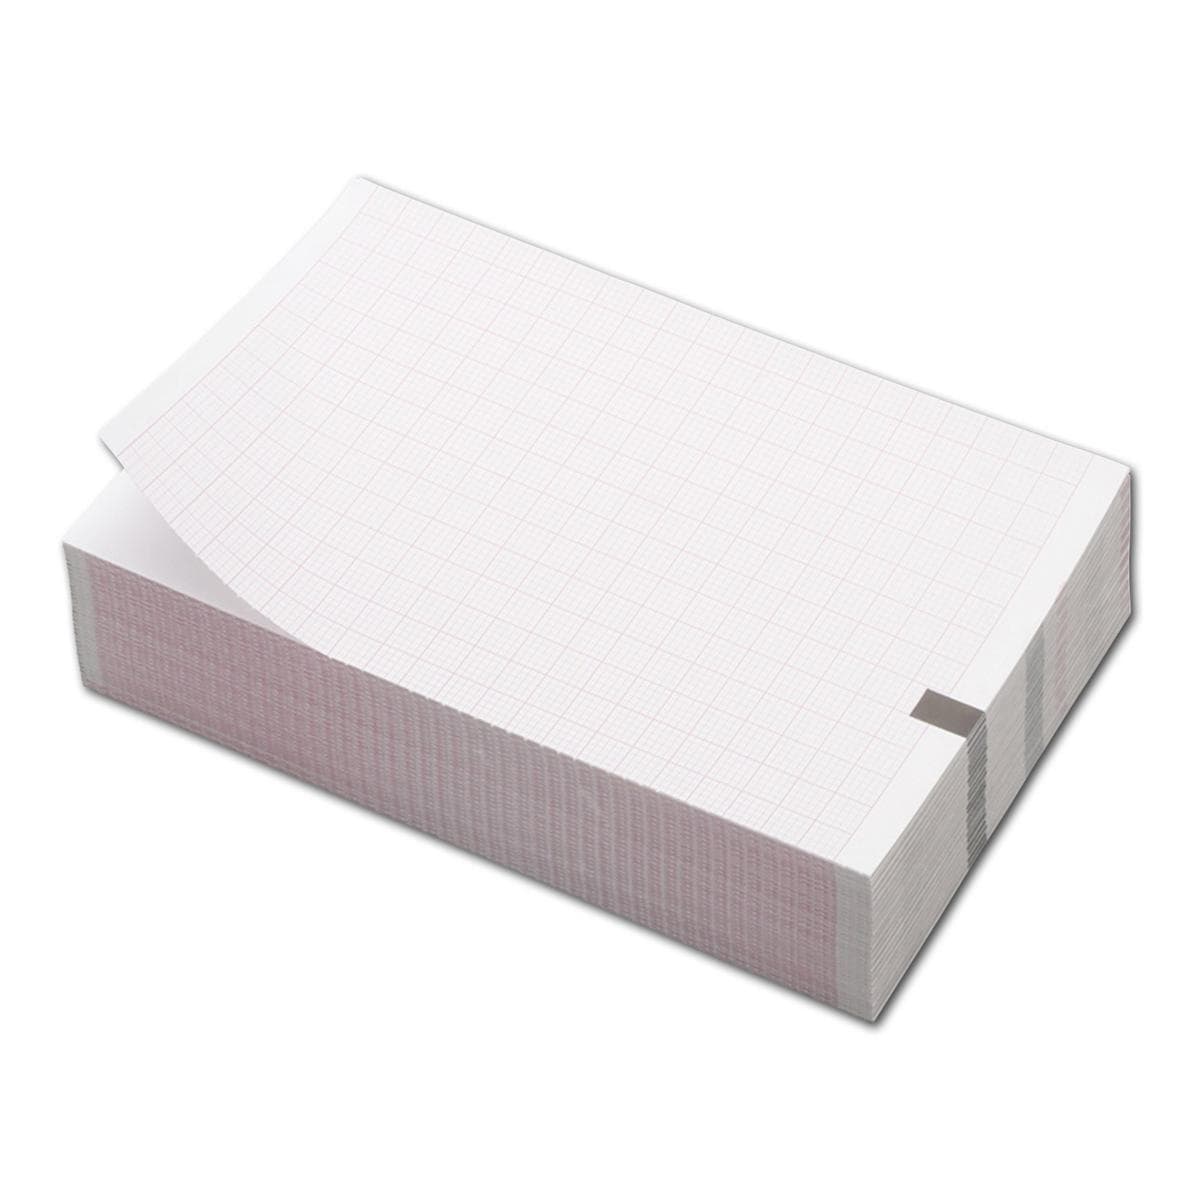 ECG papier Nihon Kohden - Cardiofax ECG-9020, 110 x 140 mm, 150 vel, per 5 stuks